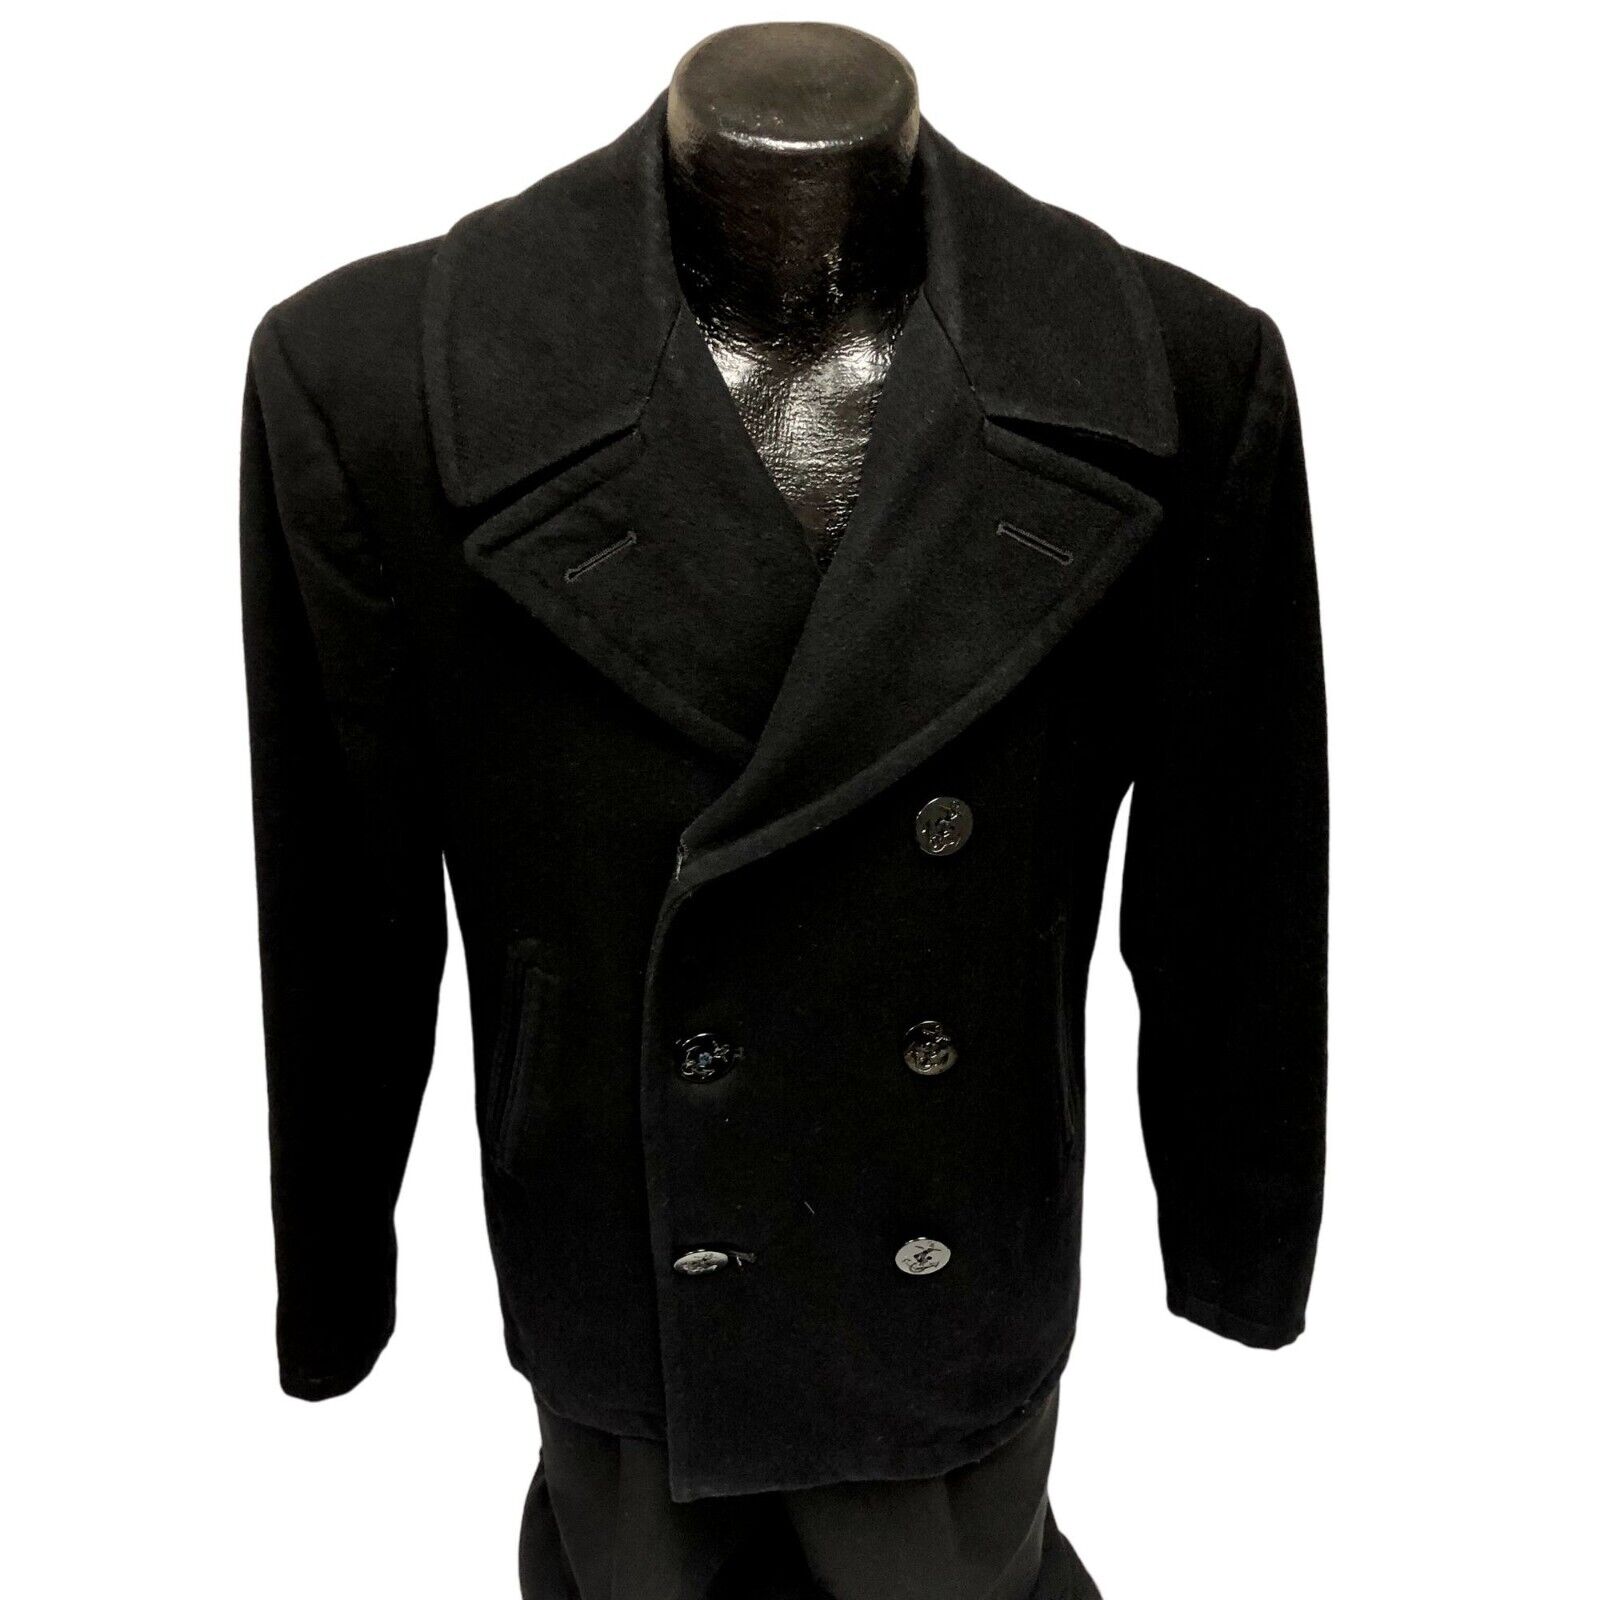 Vtg 90's Sterlingwear DSCP Black Wool PEA Coat Overcoat Military USN Navy Jacket